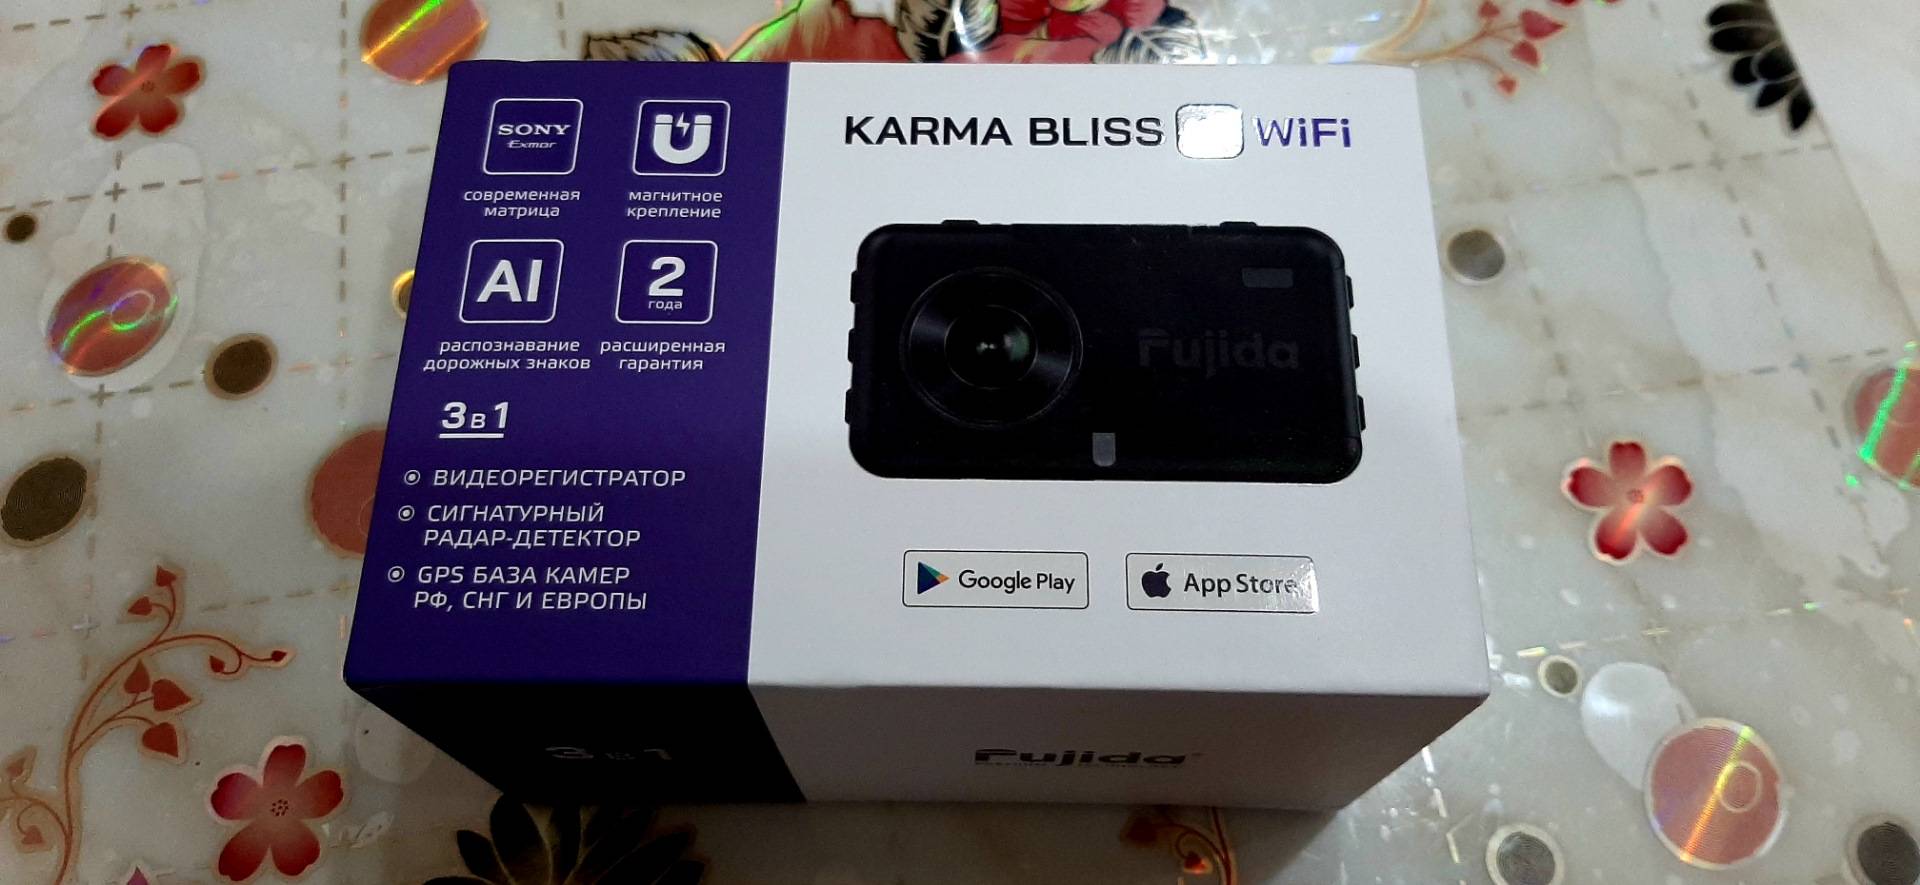 Отзывы на видеорегистратор fujida karma bliss wifi